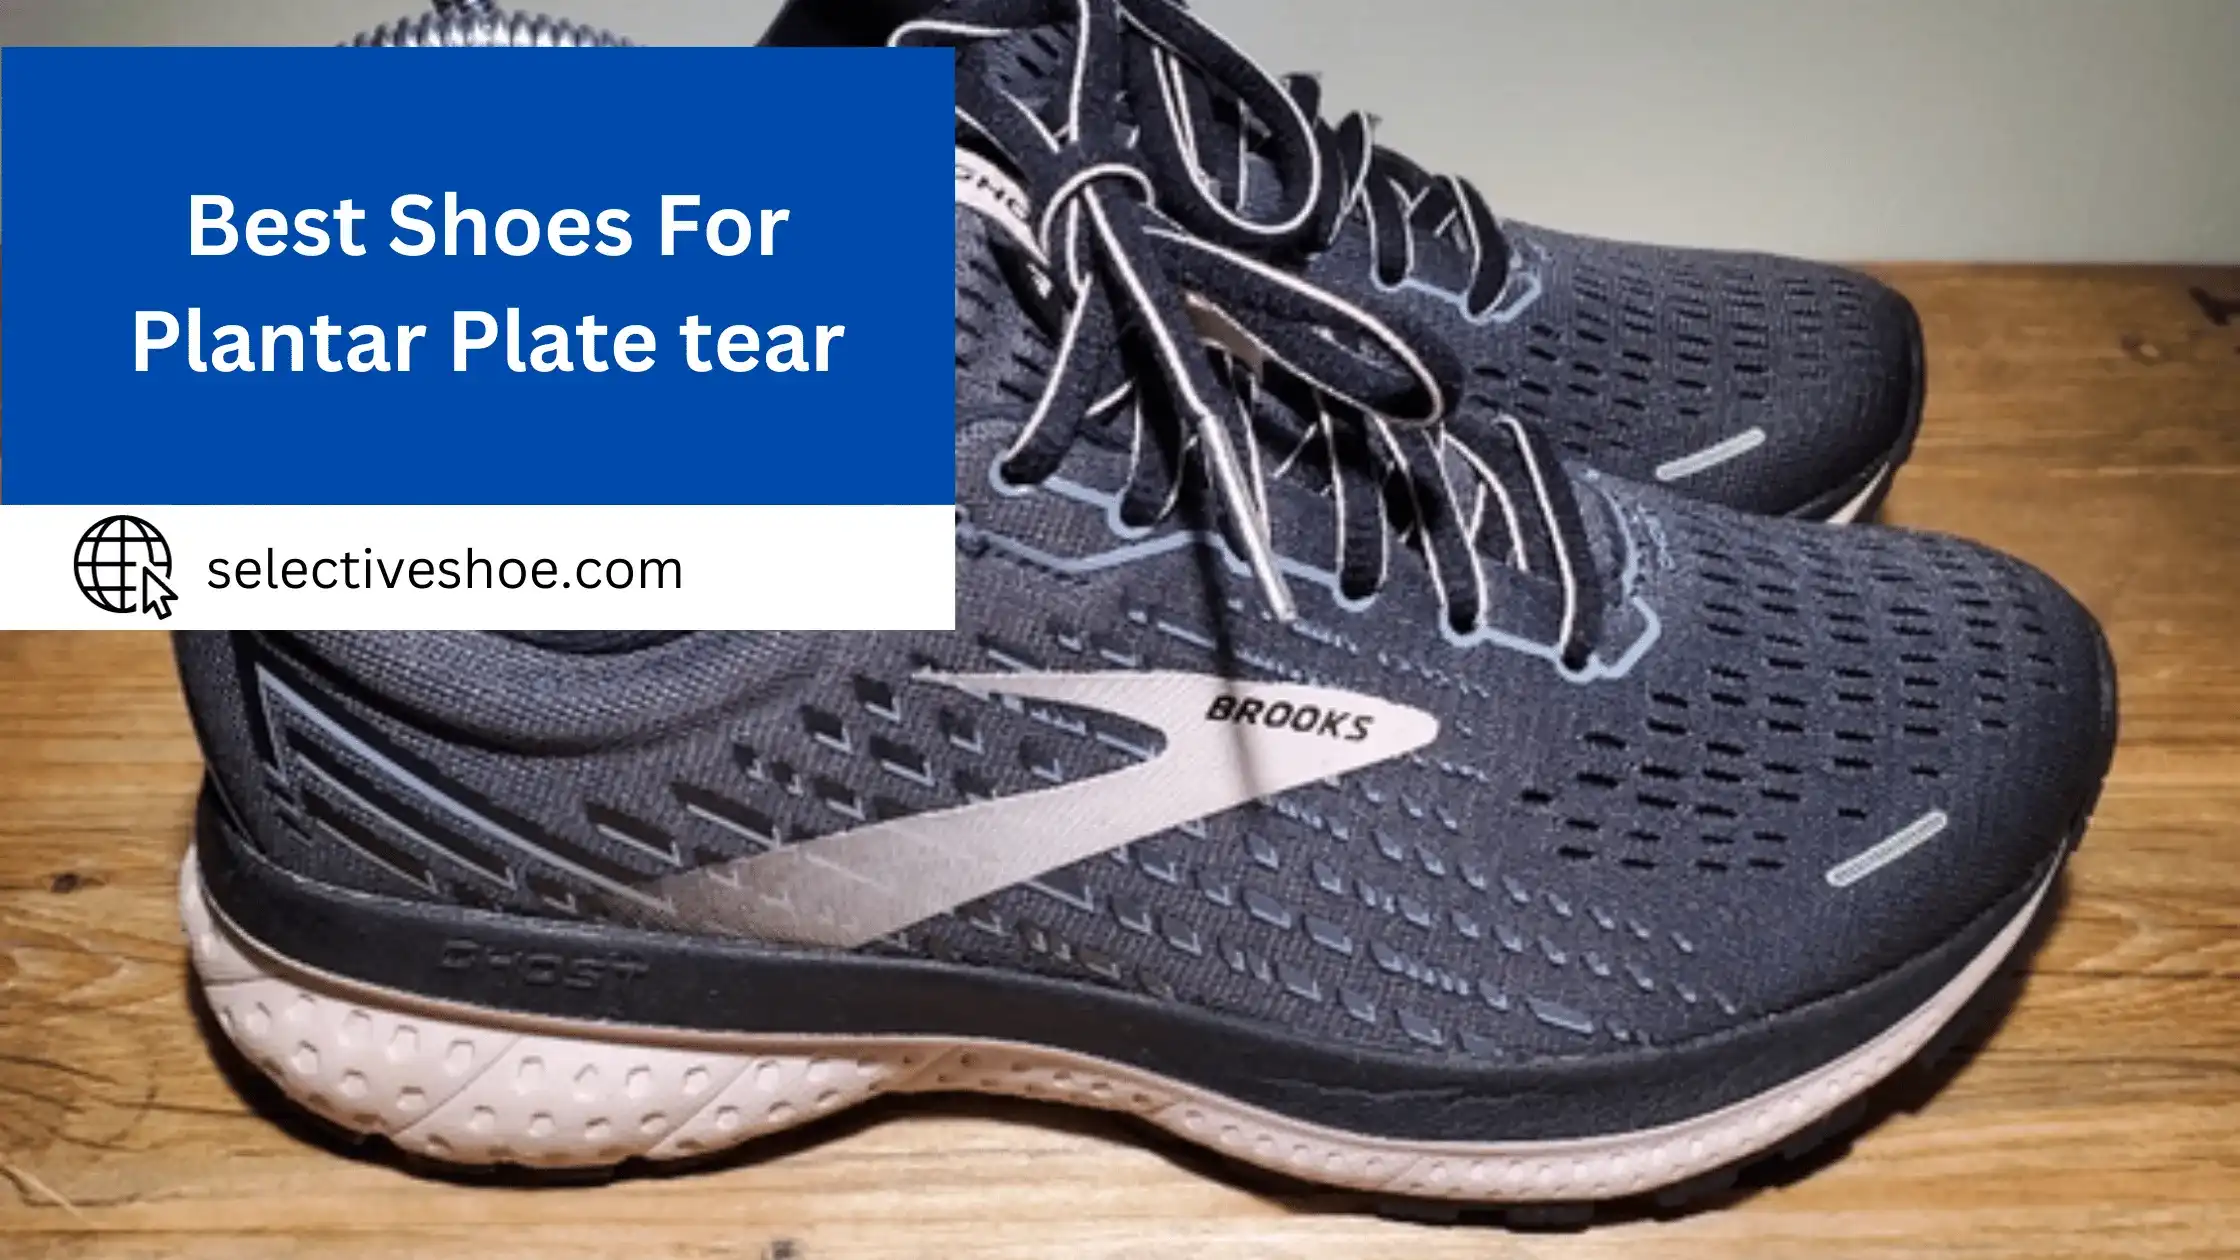 Best Shoes For Plantar Plate Tear - Expert Choice